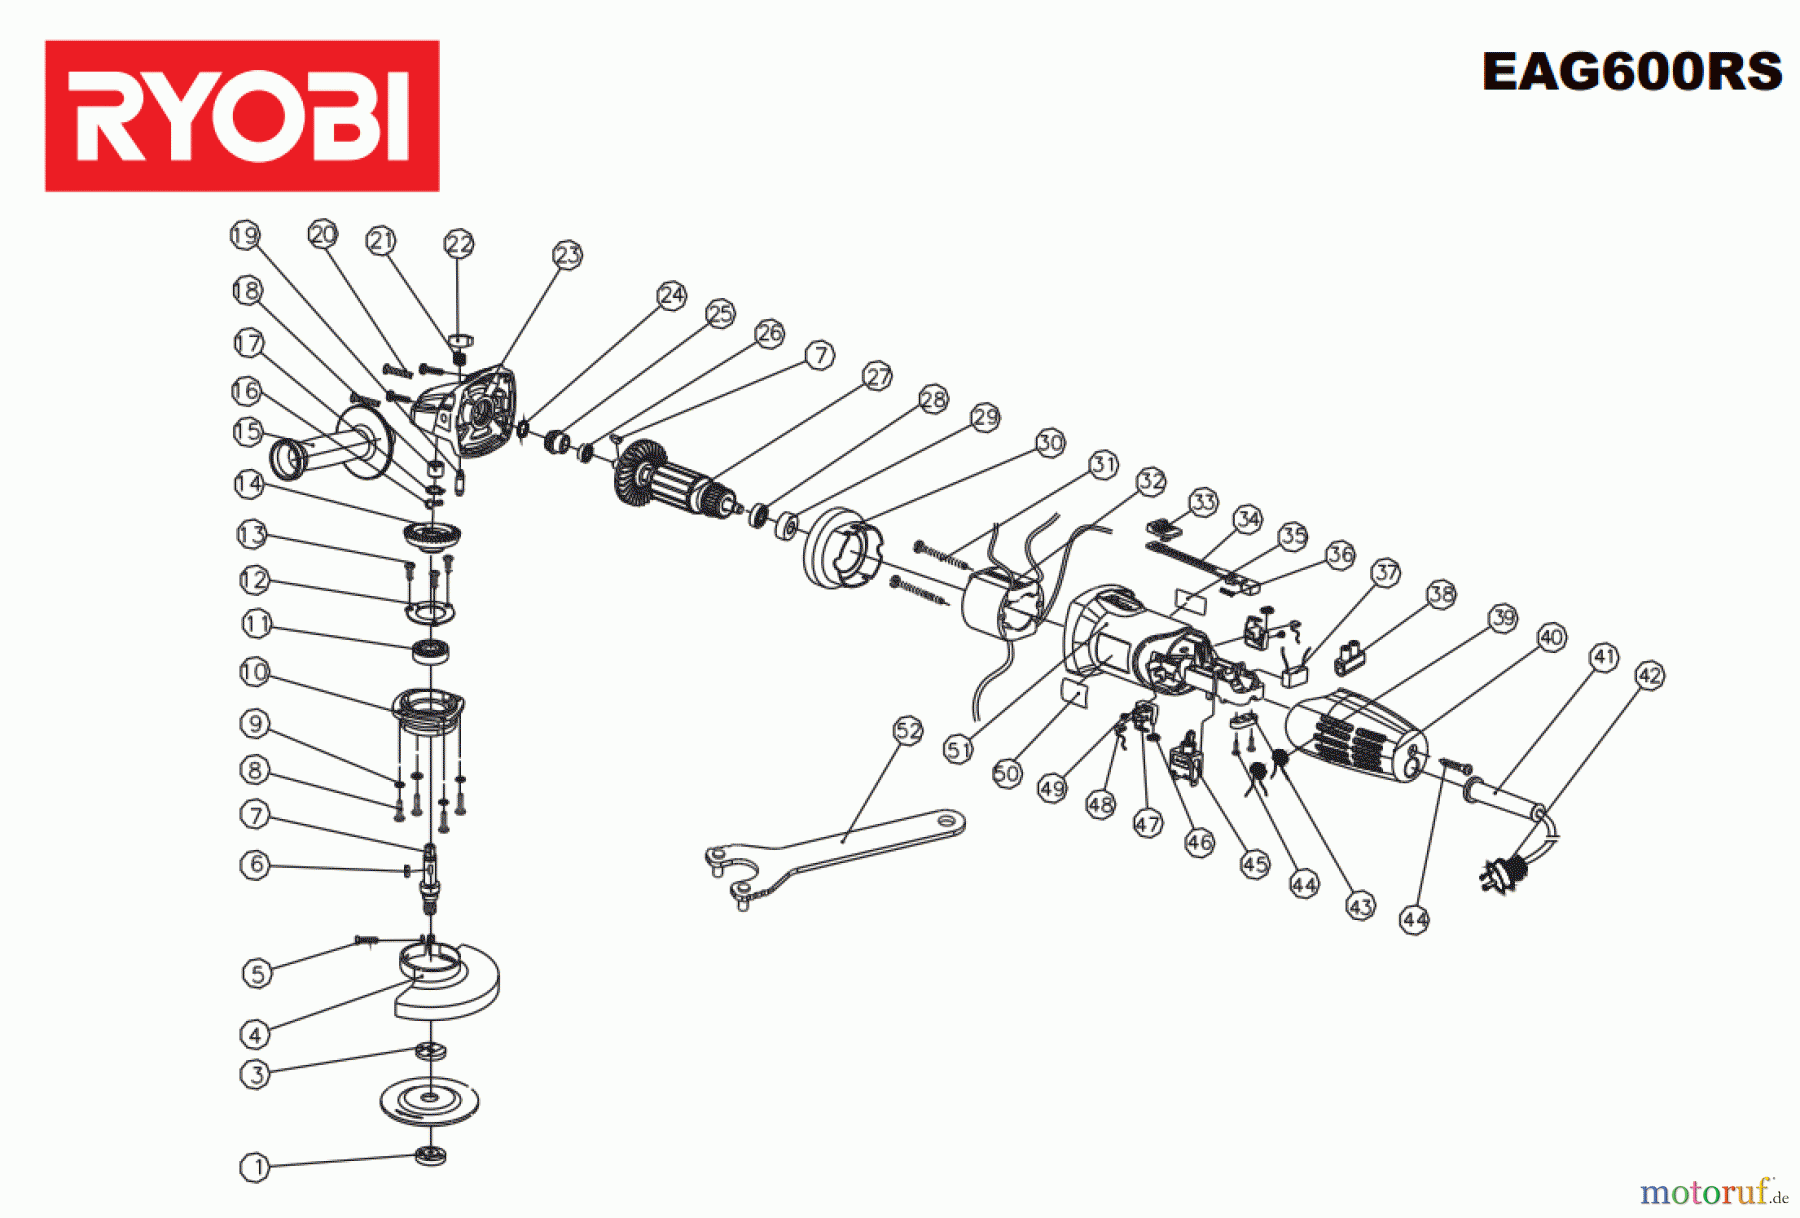  Ryobi Schleifgeräte Winkelschleifgerät EAG600RS Seite 1